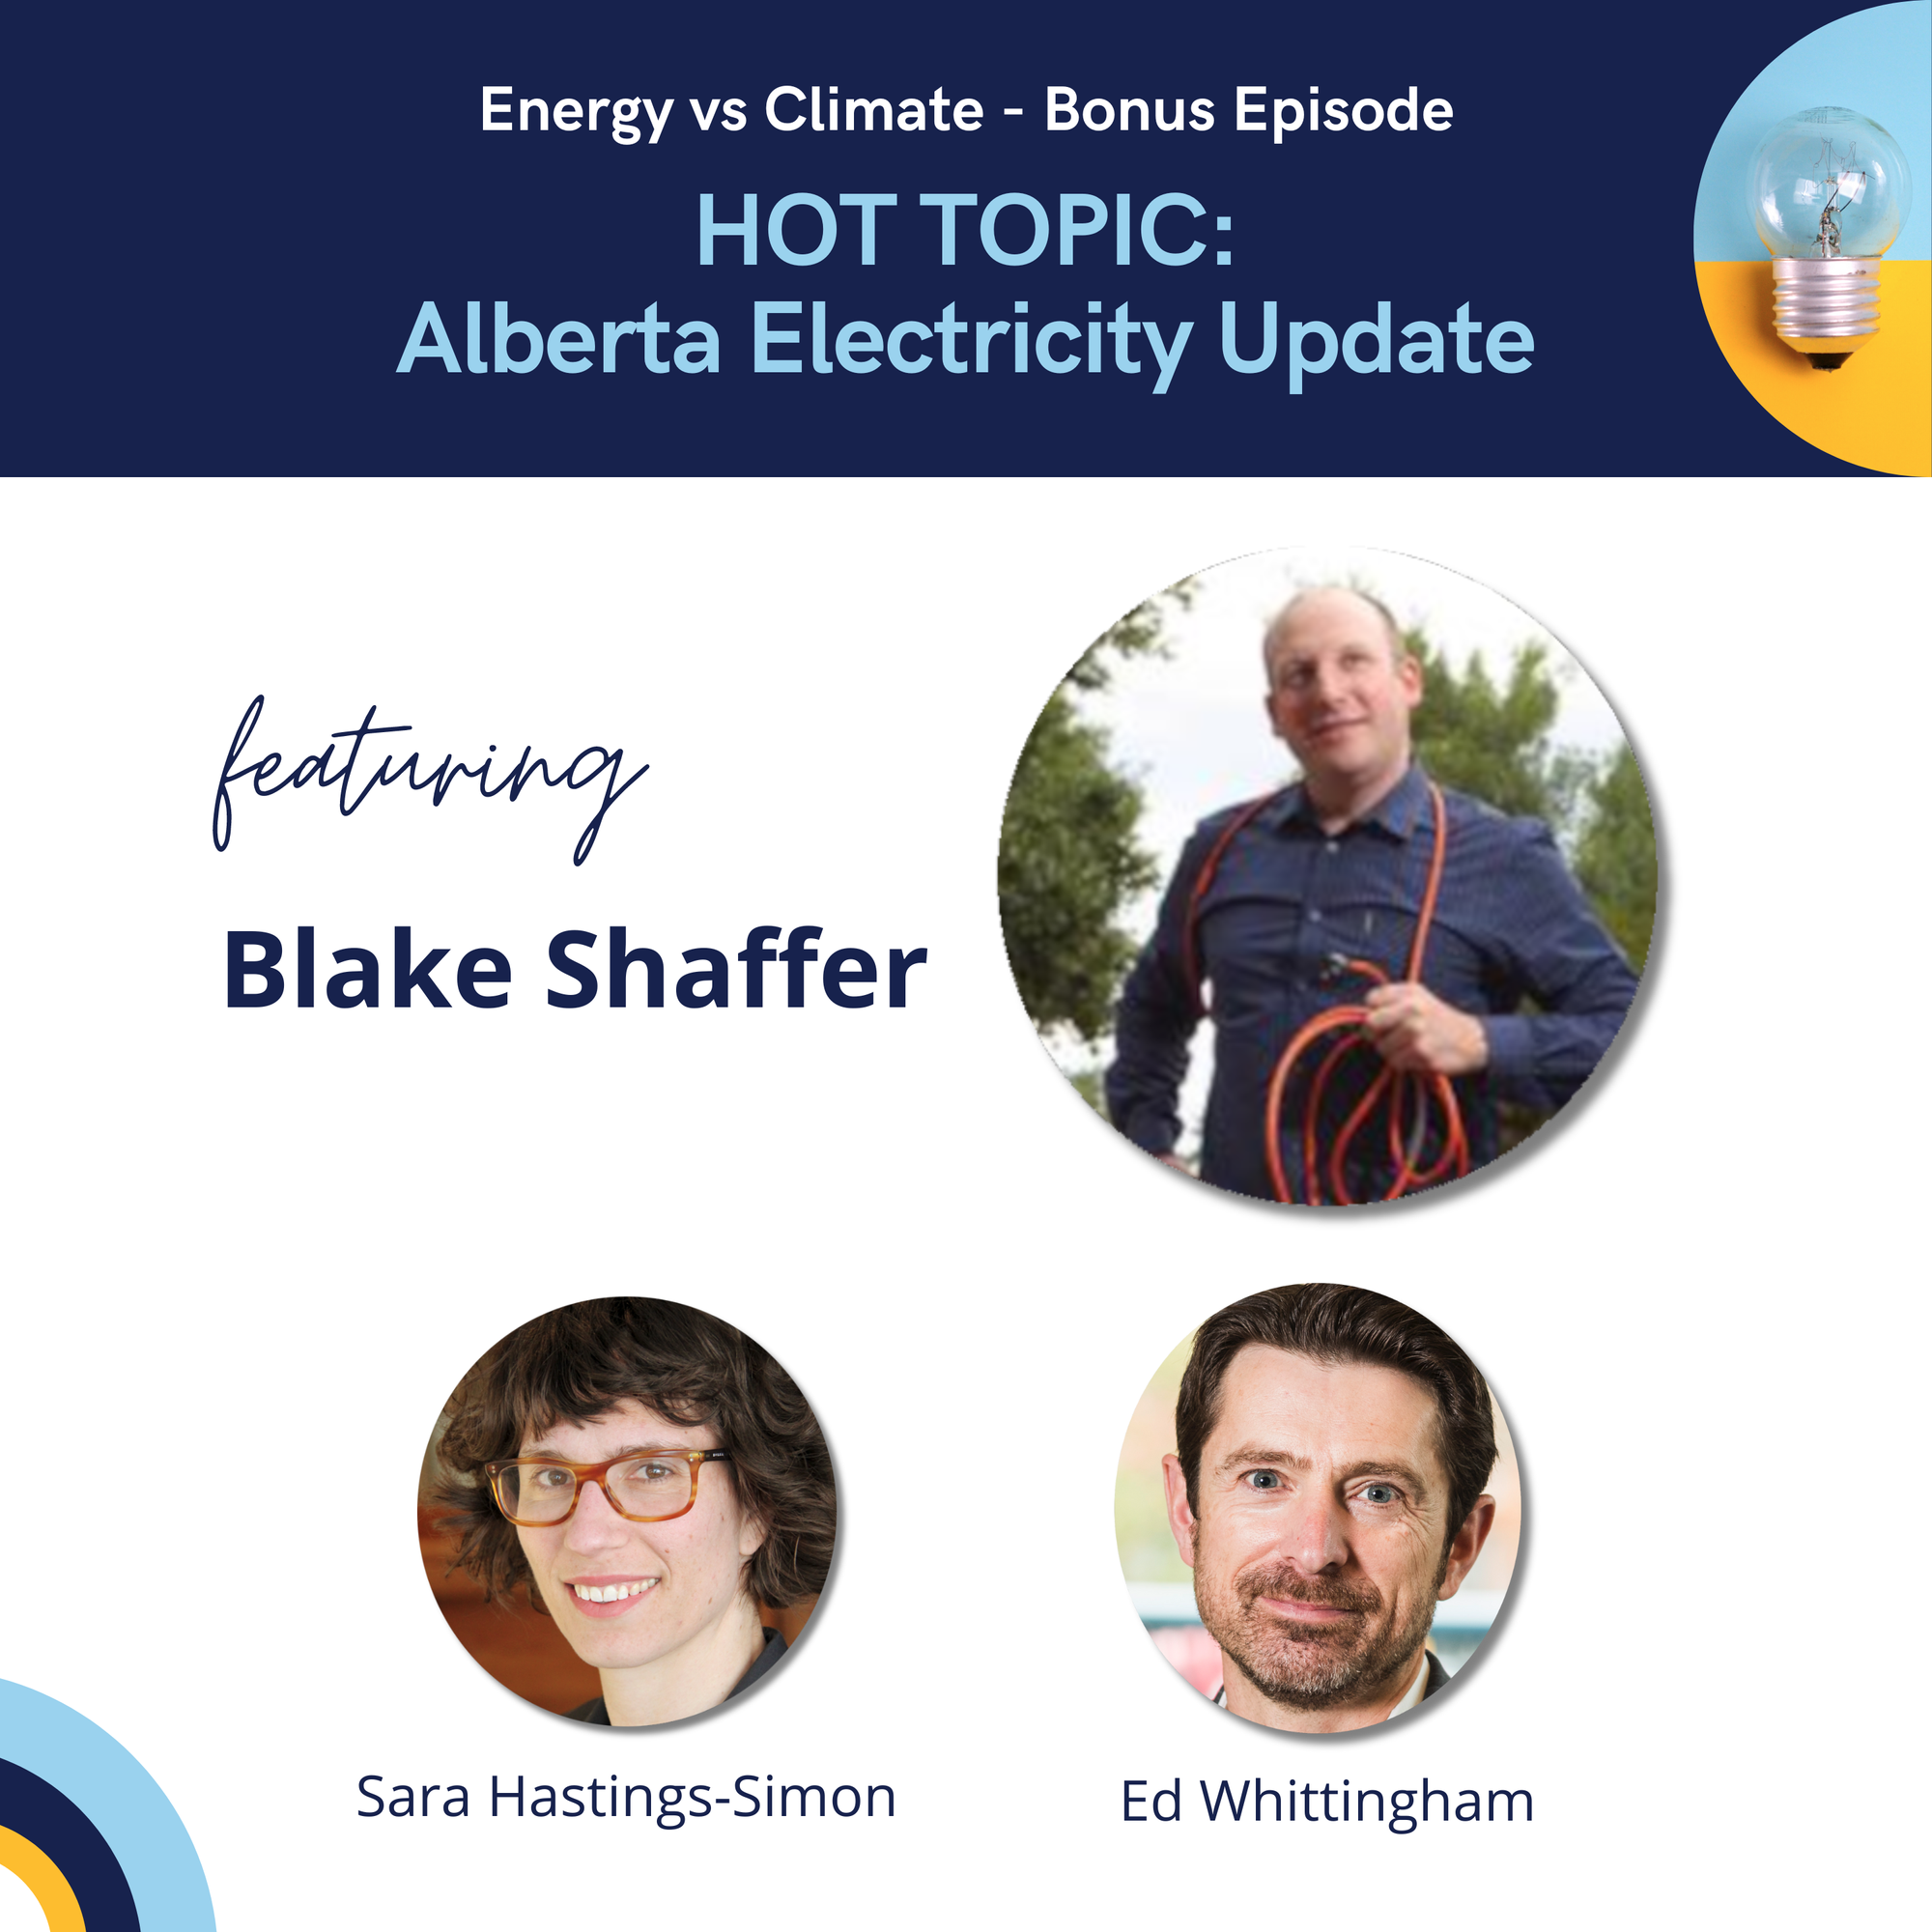 EvC Bonus - HOT TOPIC: Alberta Electricity Update